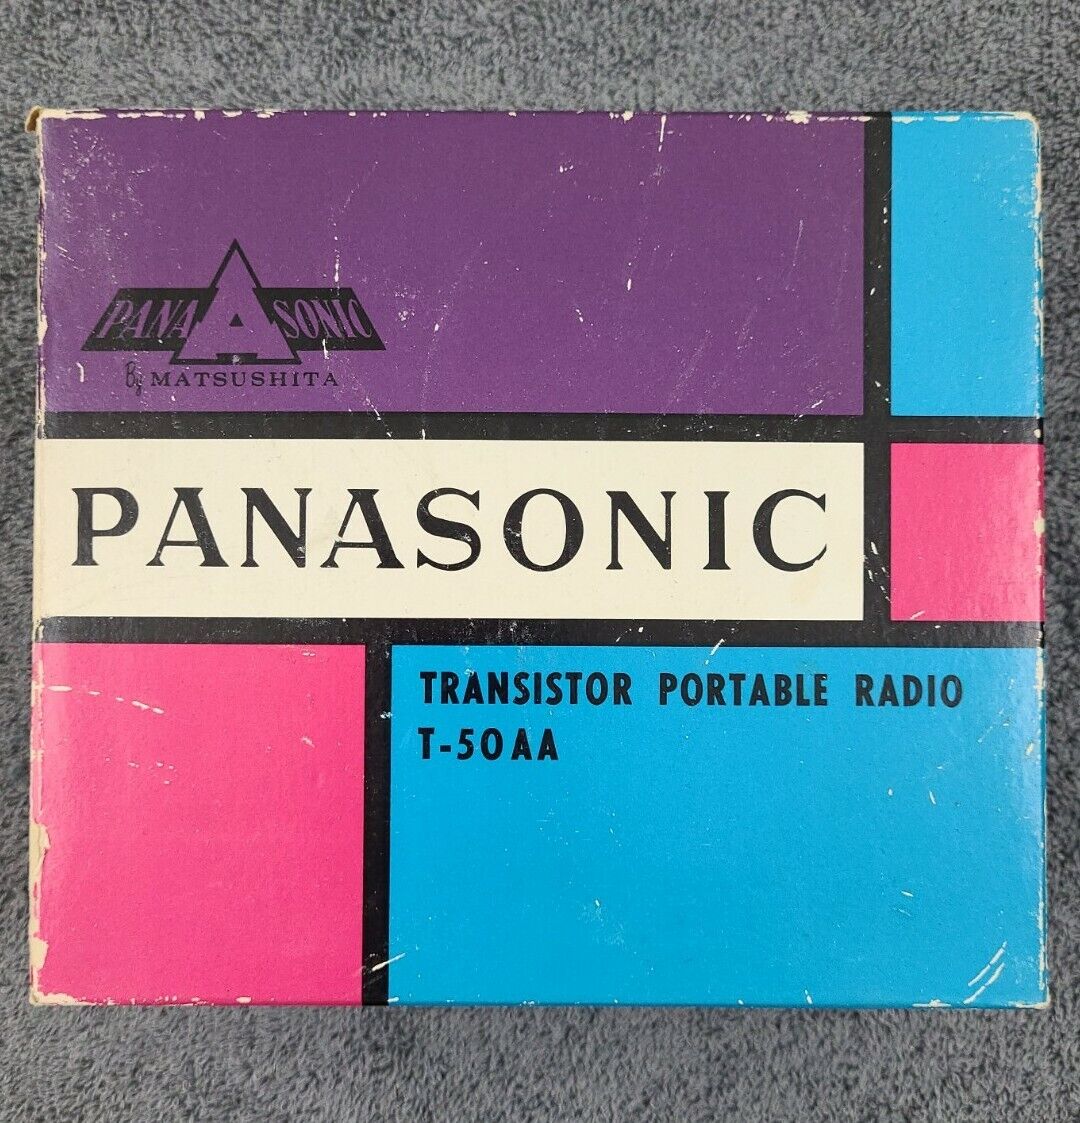 Panasonic Transistor Portable Radio T-50AA with Box 